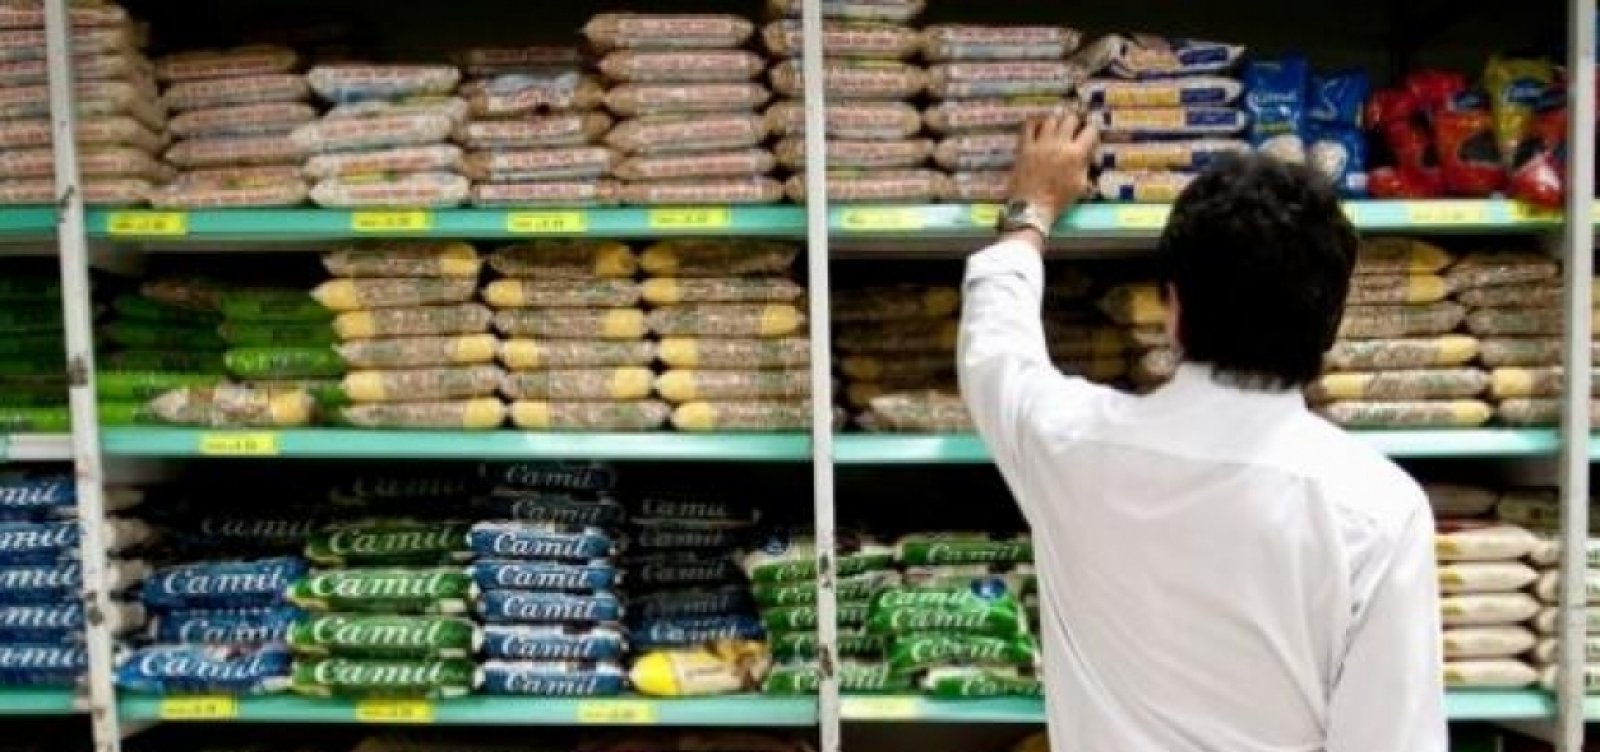 Covid-19: Distribuidores doam 8,4 ton de produtos a famílias impactadas pela crise